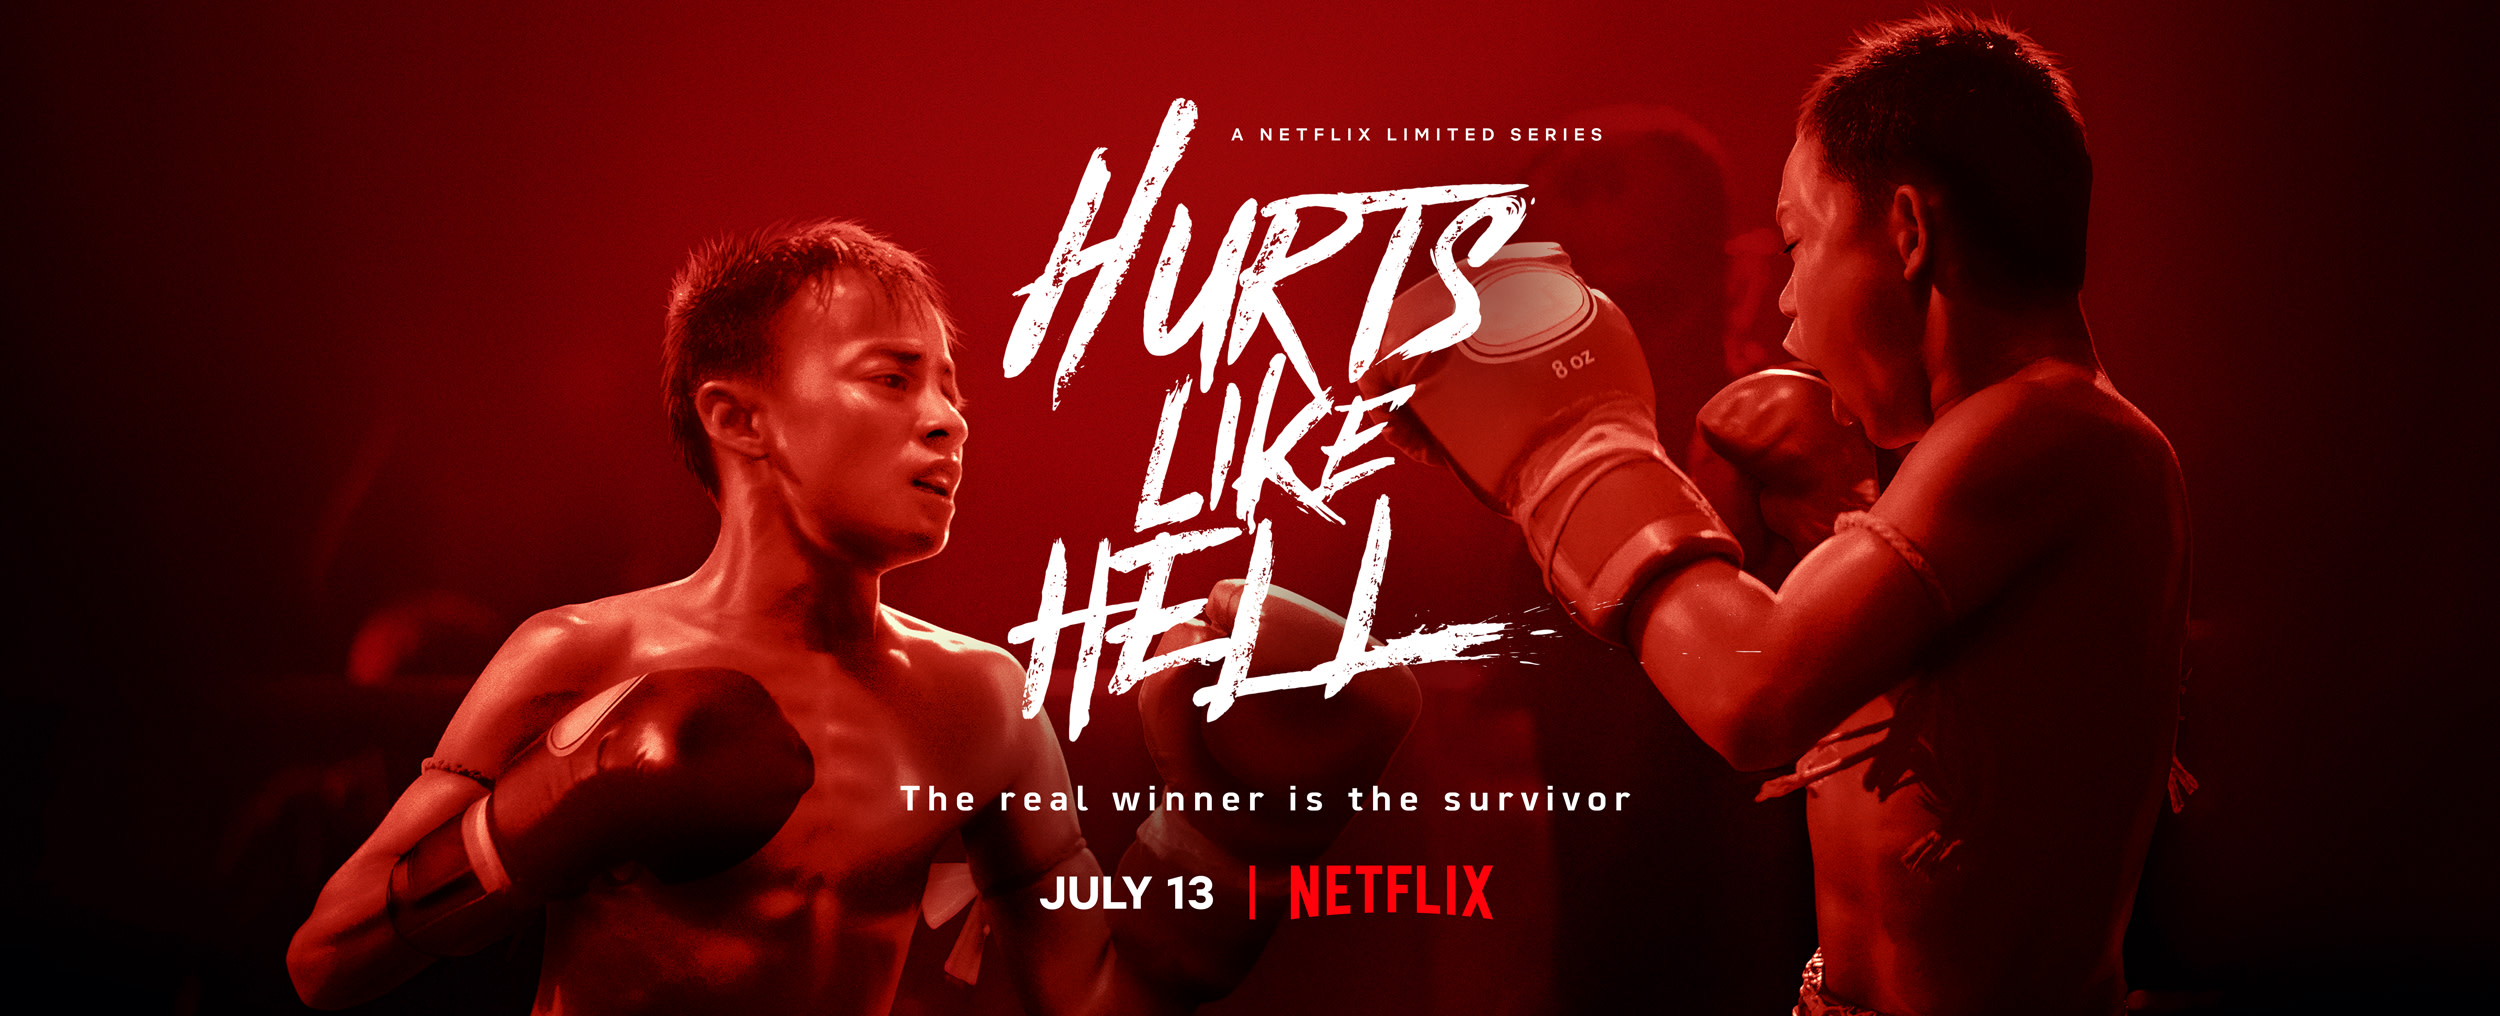 Netflix Announces ‘Hurts Like Hell’ 